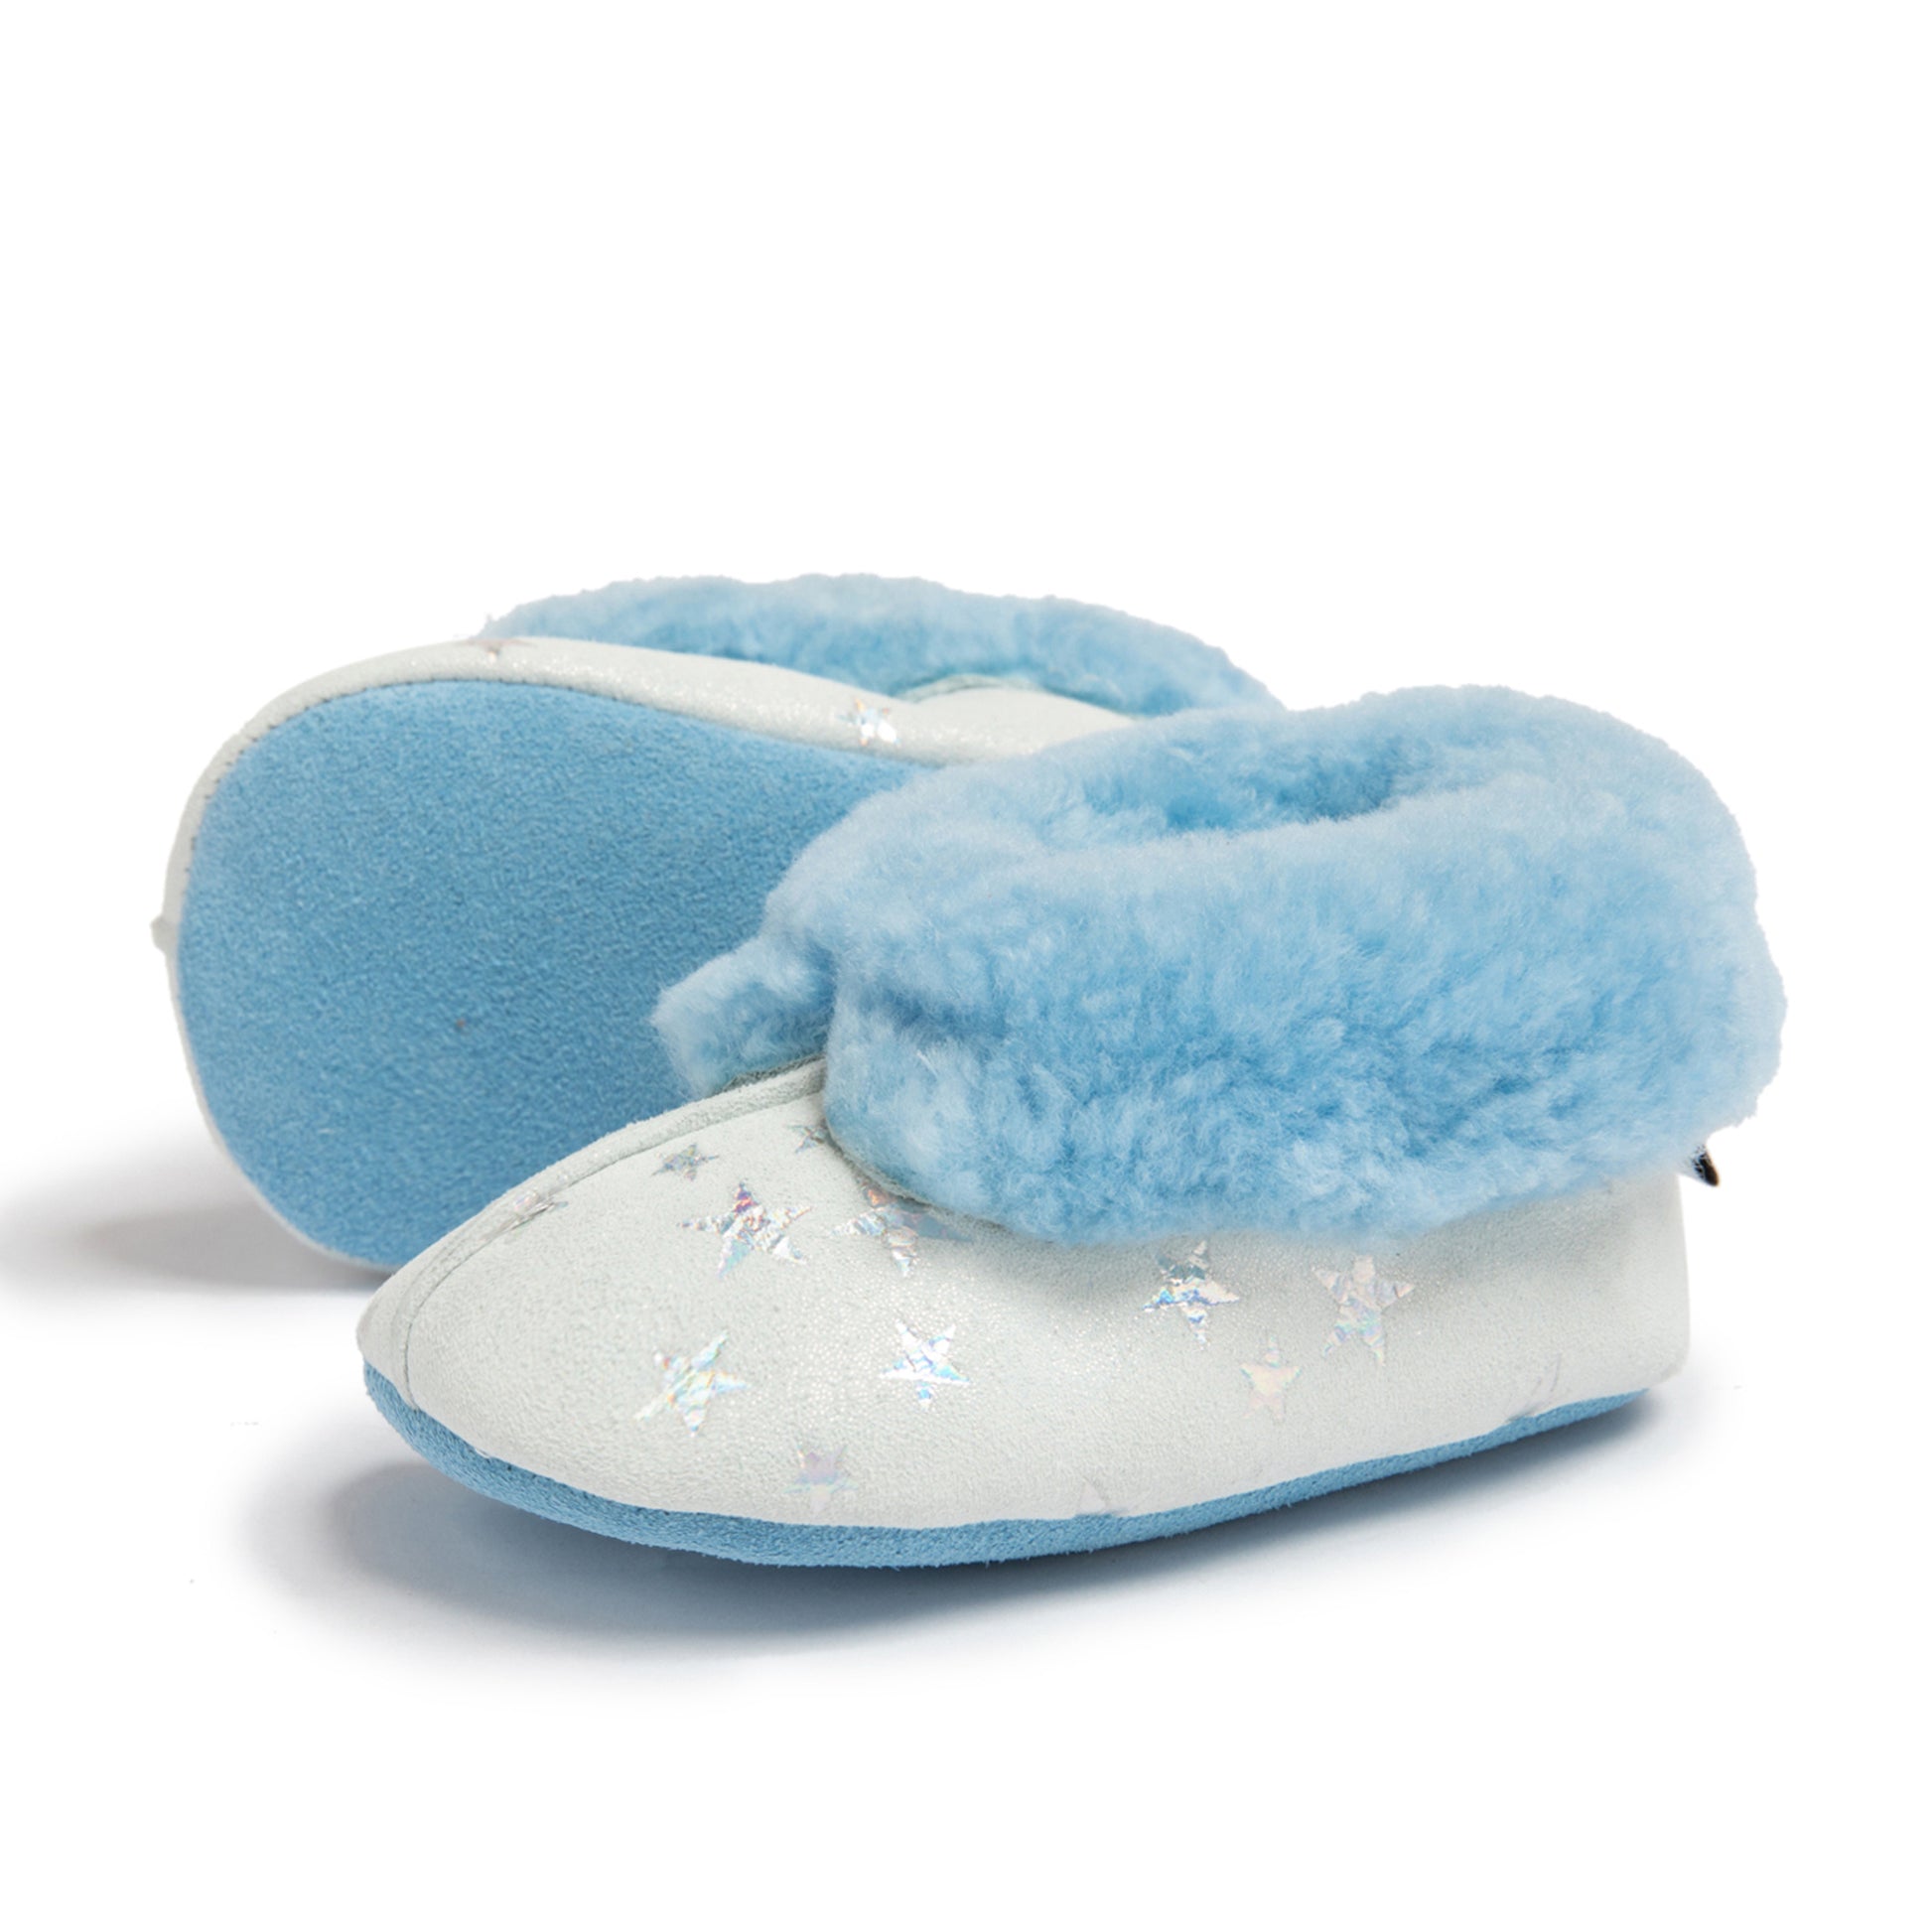 CLYDE Soft Sole Slippers Grey & Blue - Shop Online | shooshoos.co.za